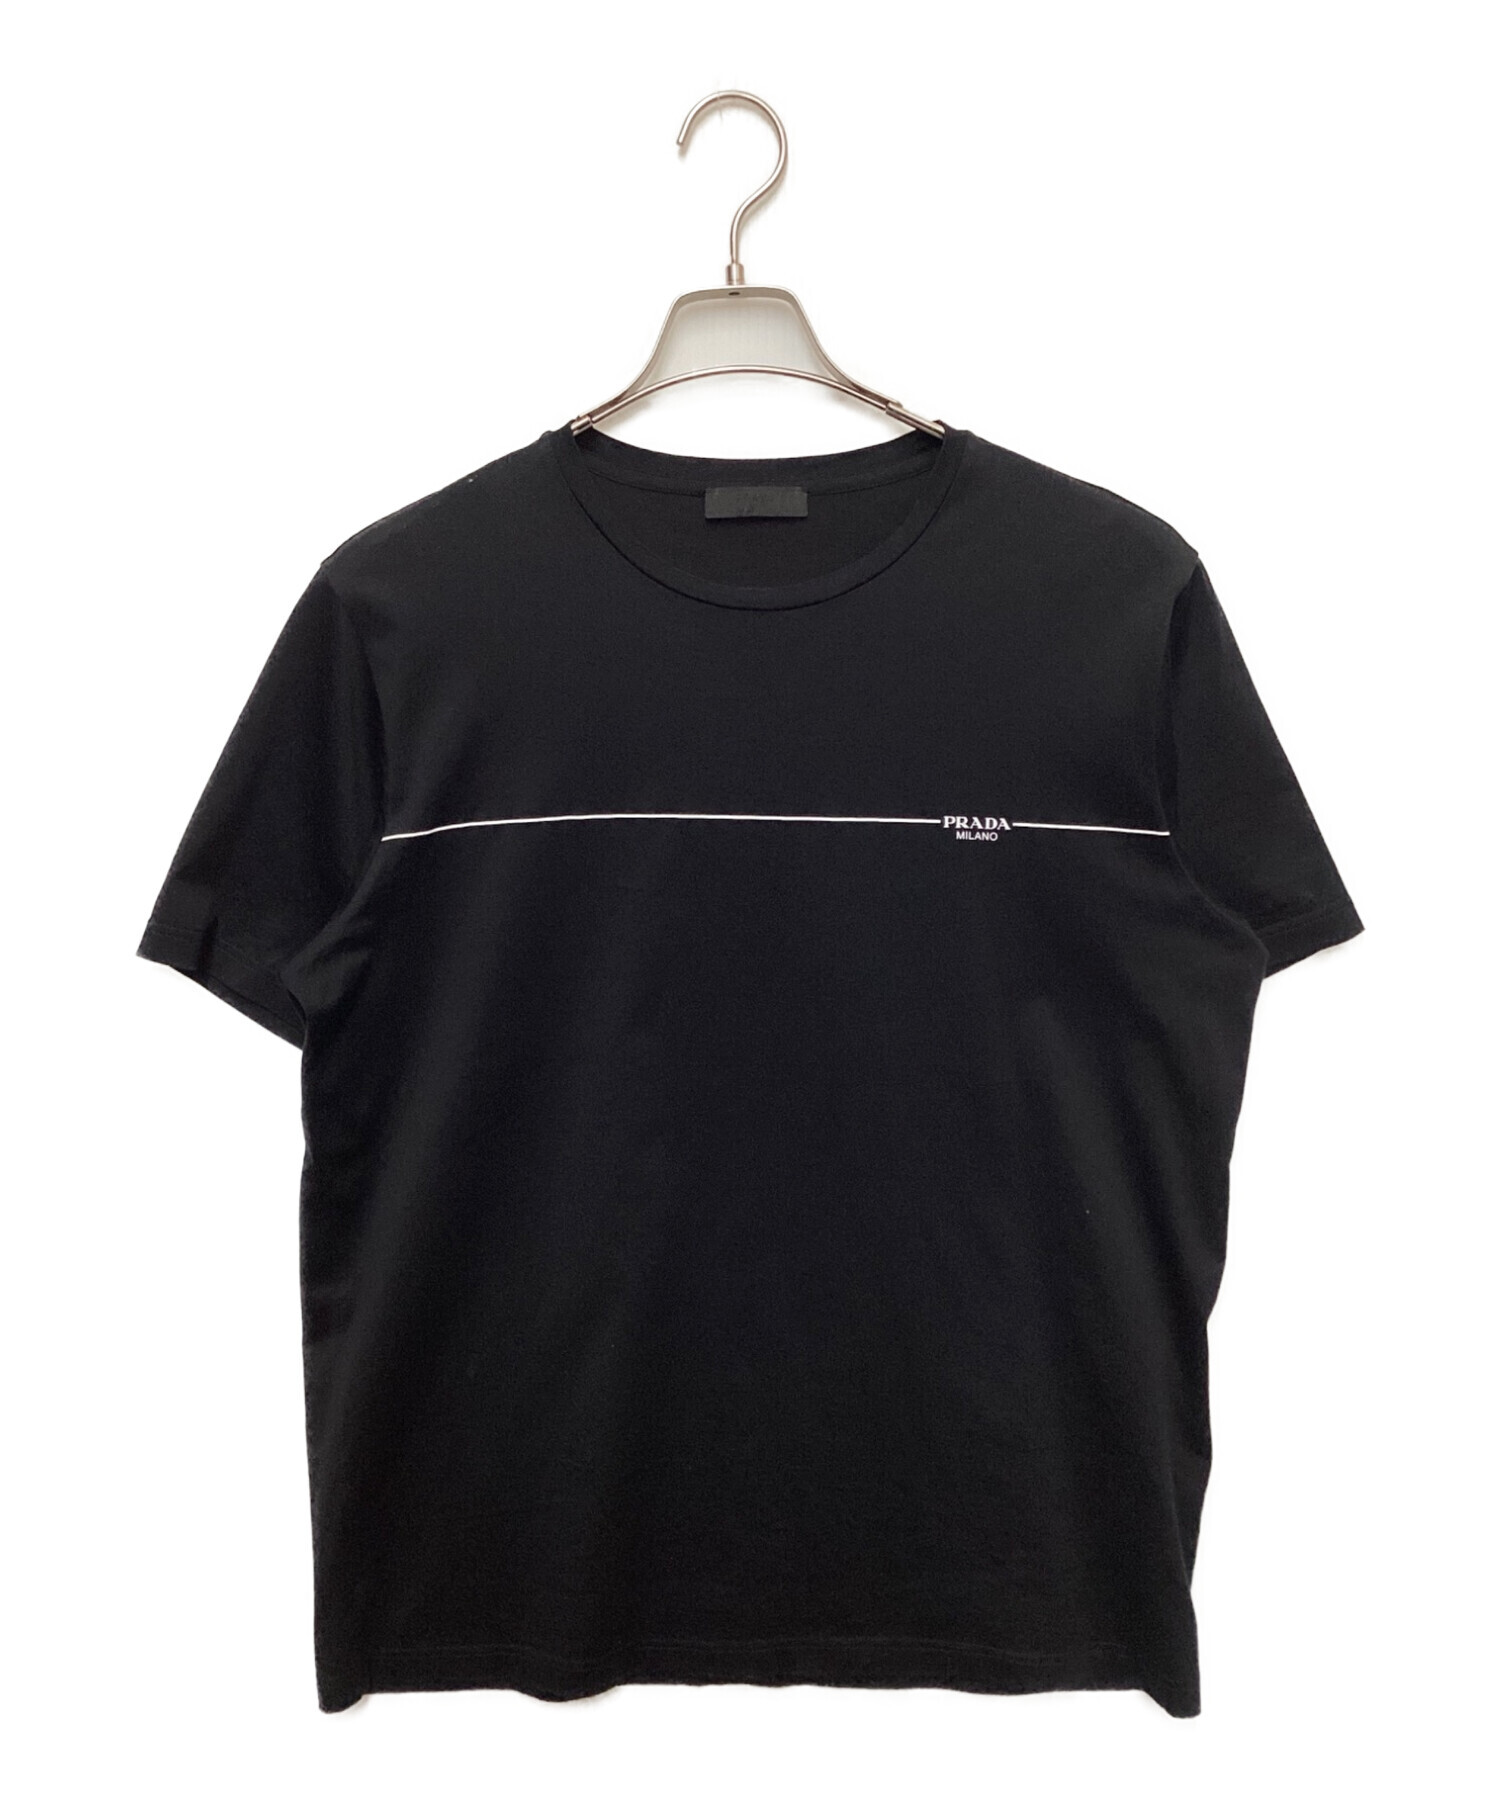 PRADA (プラダ) ロゴプリントTシャツ ブラック サイズ:XL